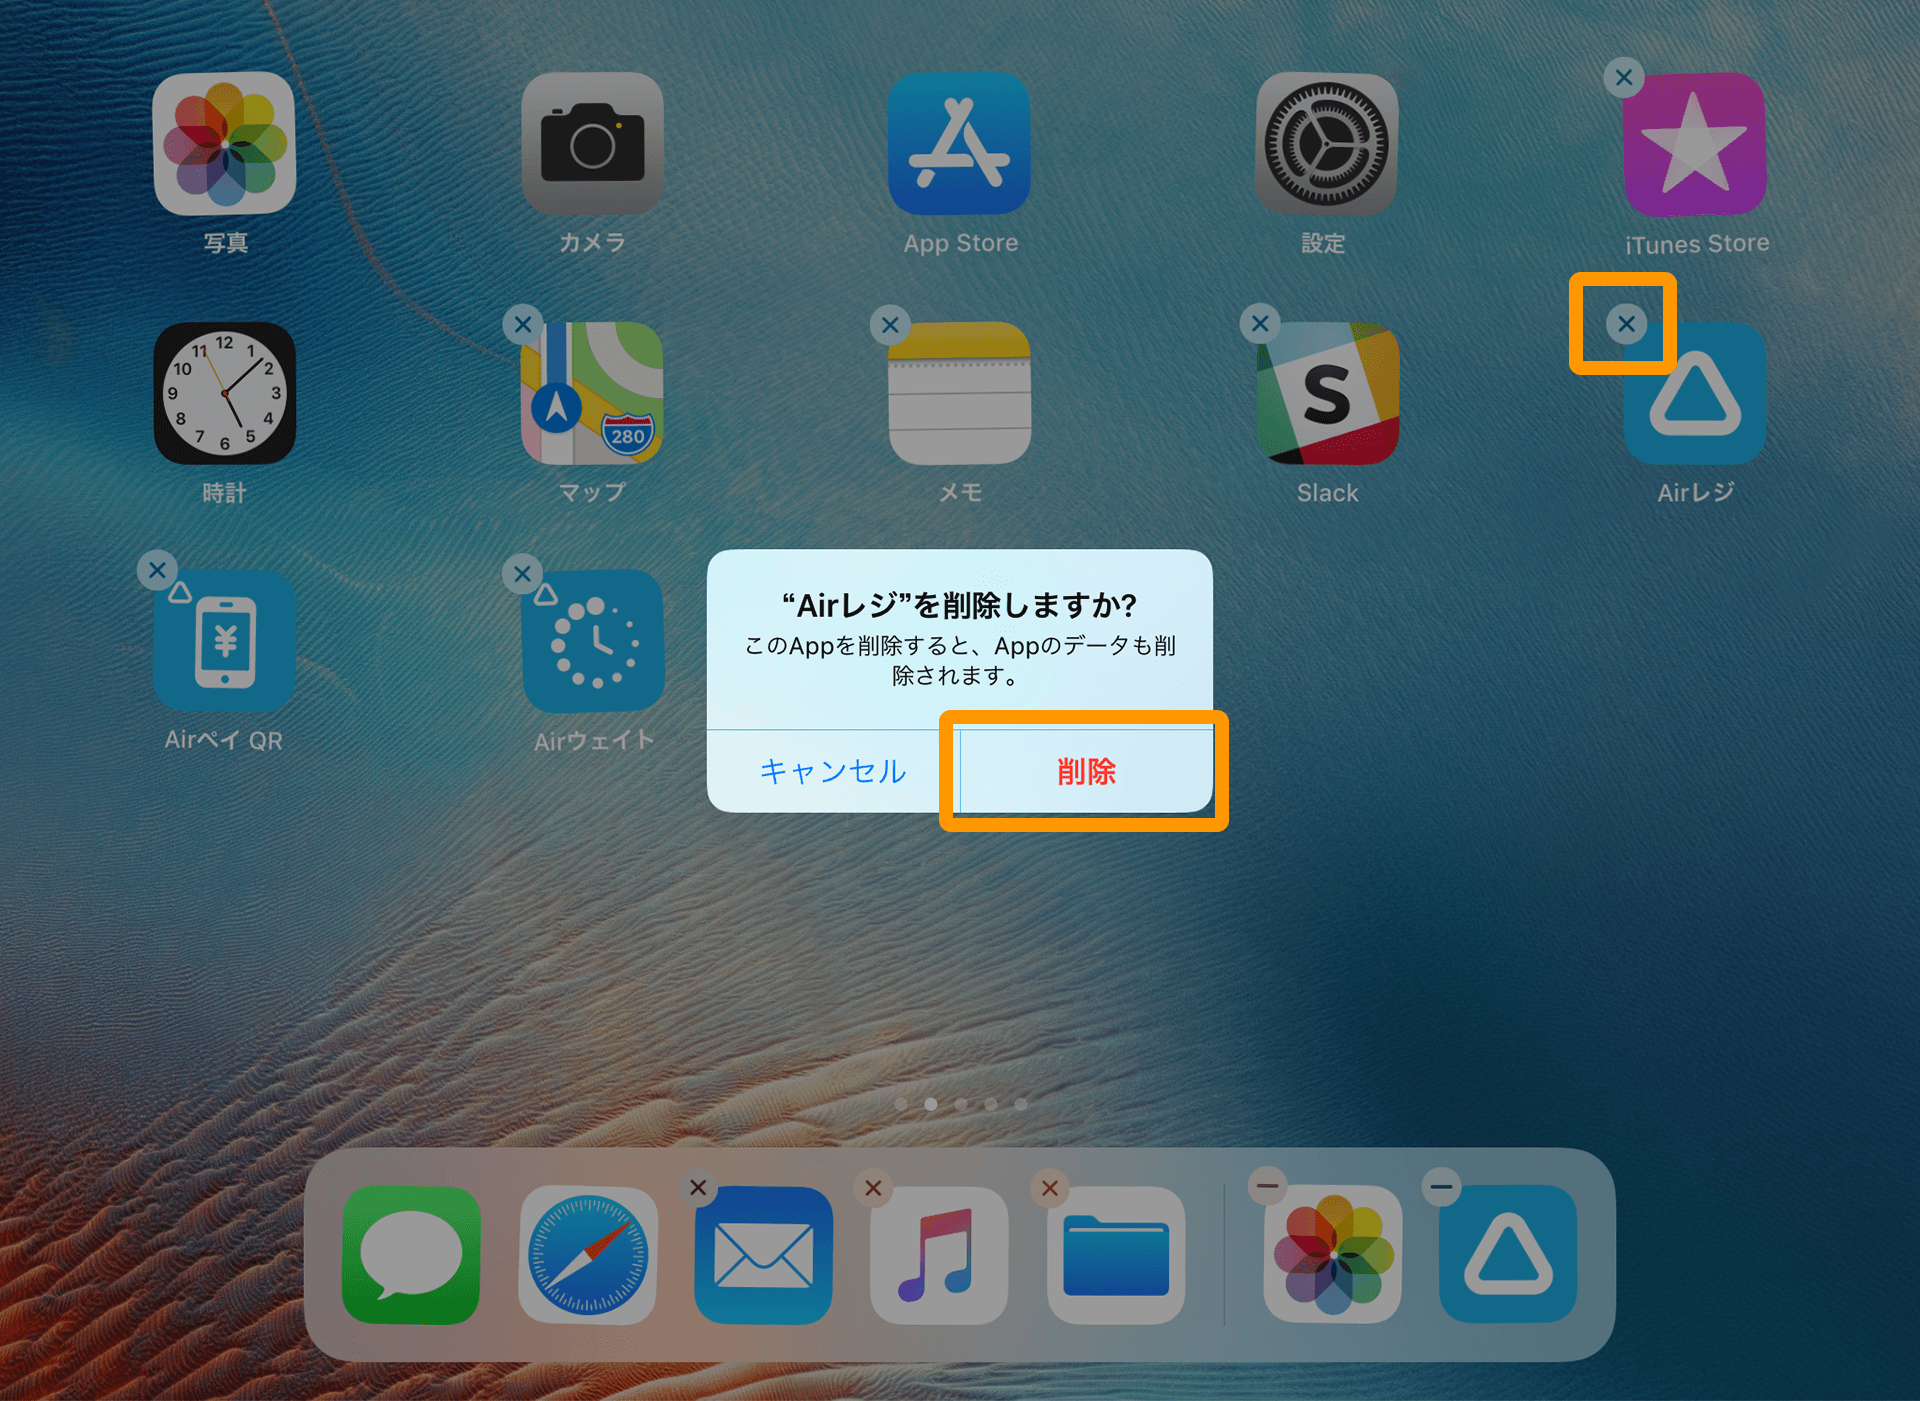 iPhone/iPad ホーム画面 Airレジを削除しますか？ このAppを削除すると、Appのデータも削除されます。削除